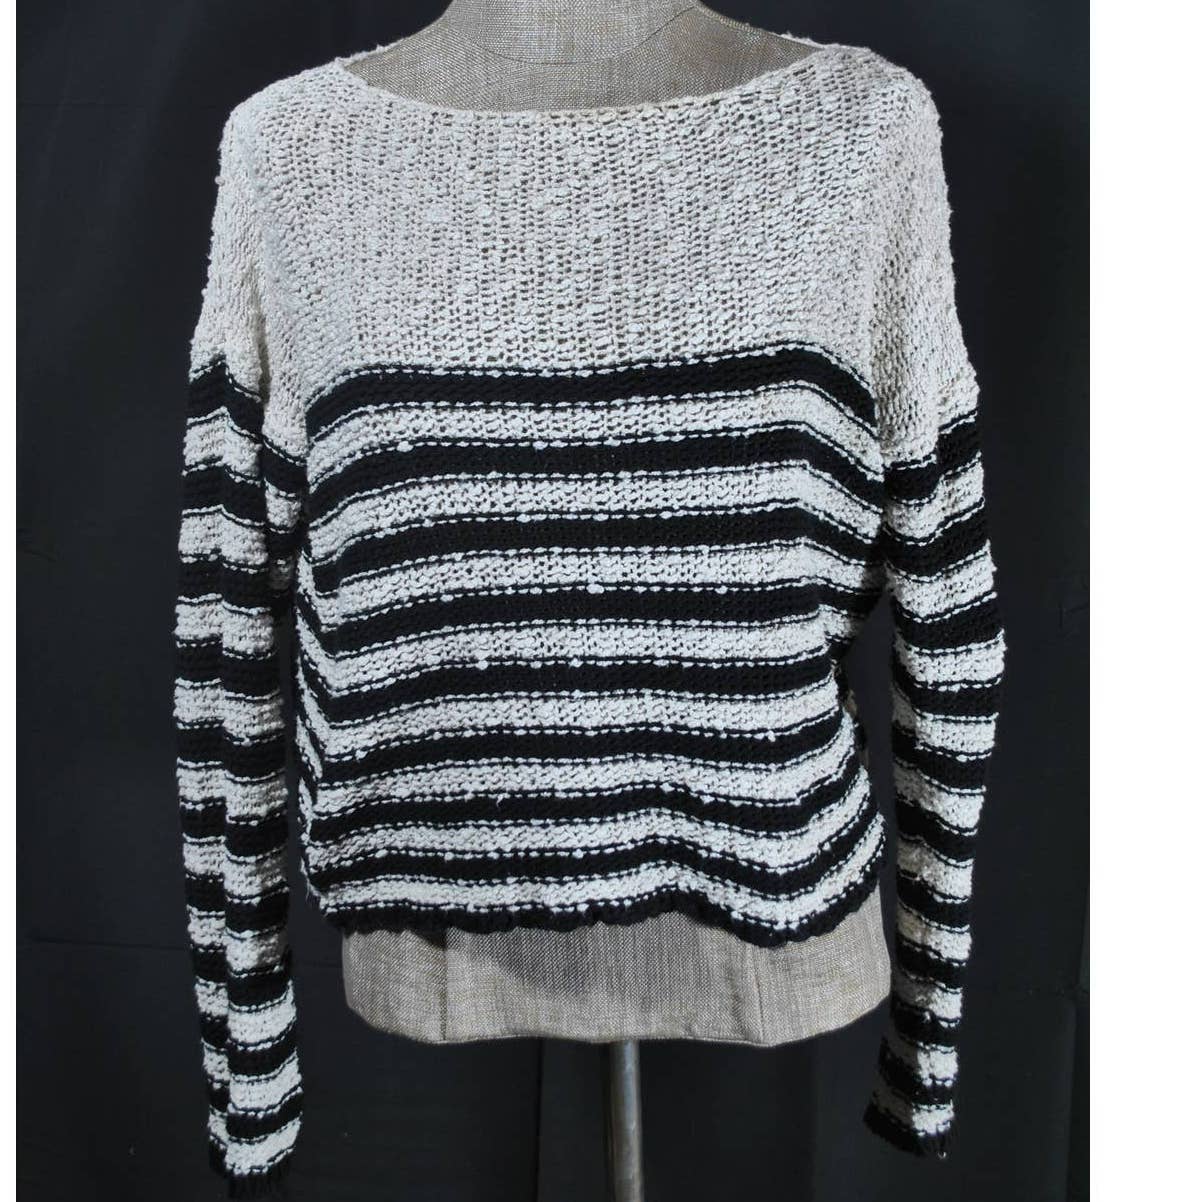 Brandy Melville White Black Striped Knit Sweater - One SIze